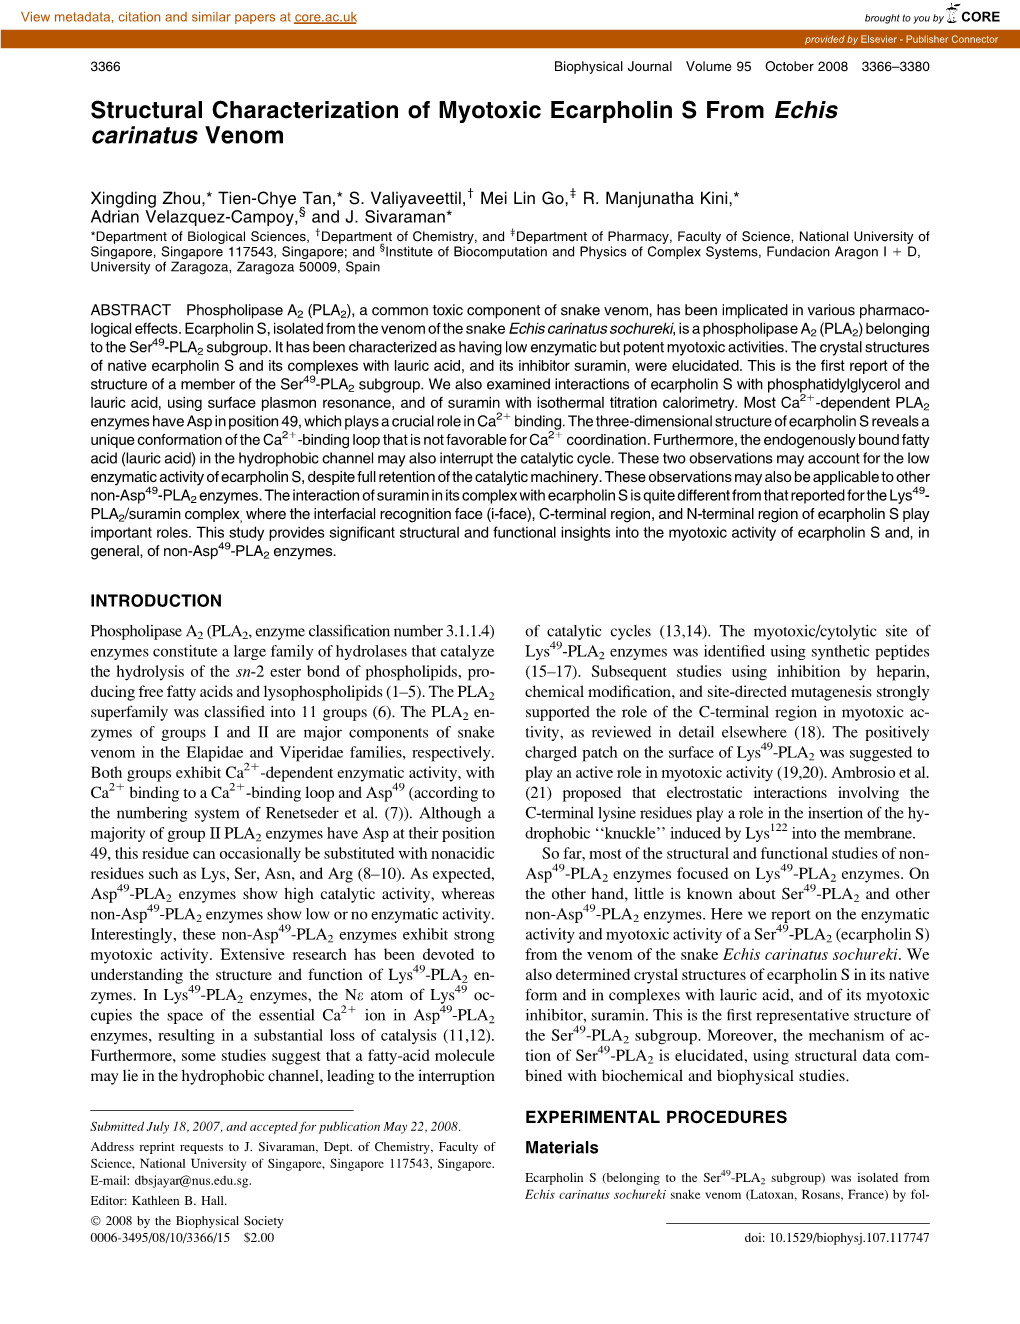 Structural Characterization of Myotoxic Ecarpholin S from Echis Carinatus Venom